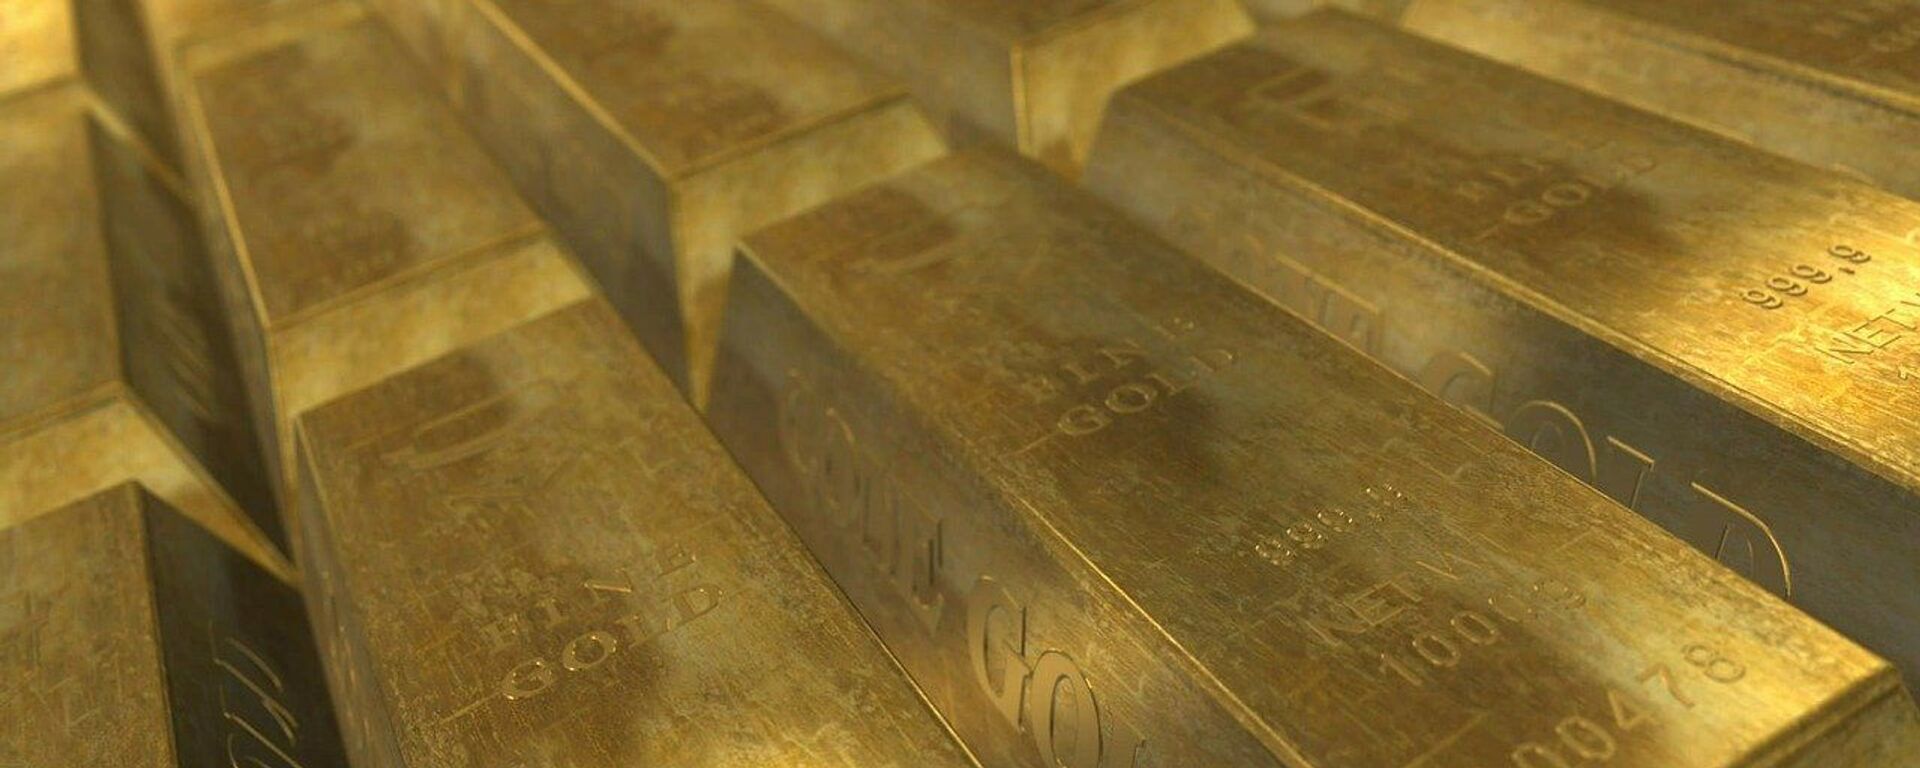 Gold bars - Sputnik International, 1920, 05.09.2020